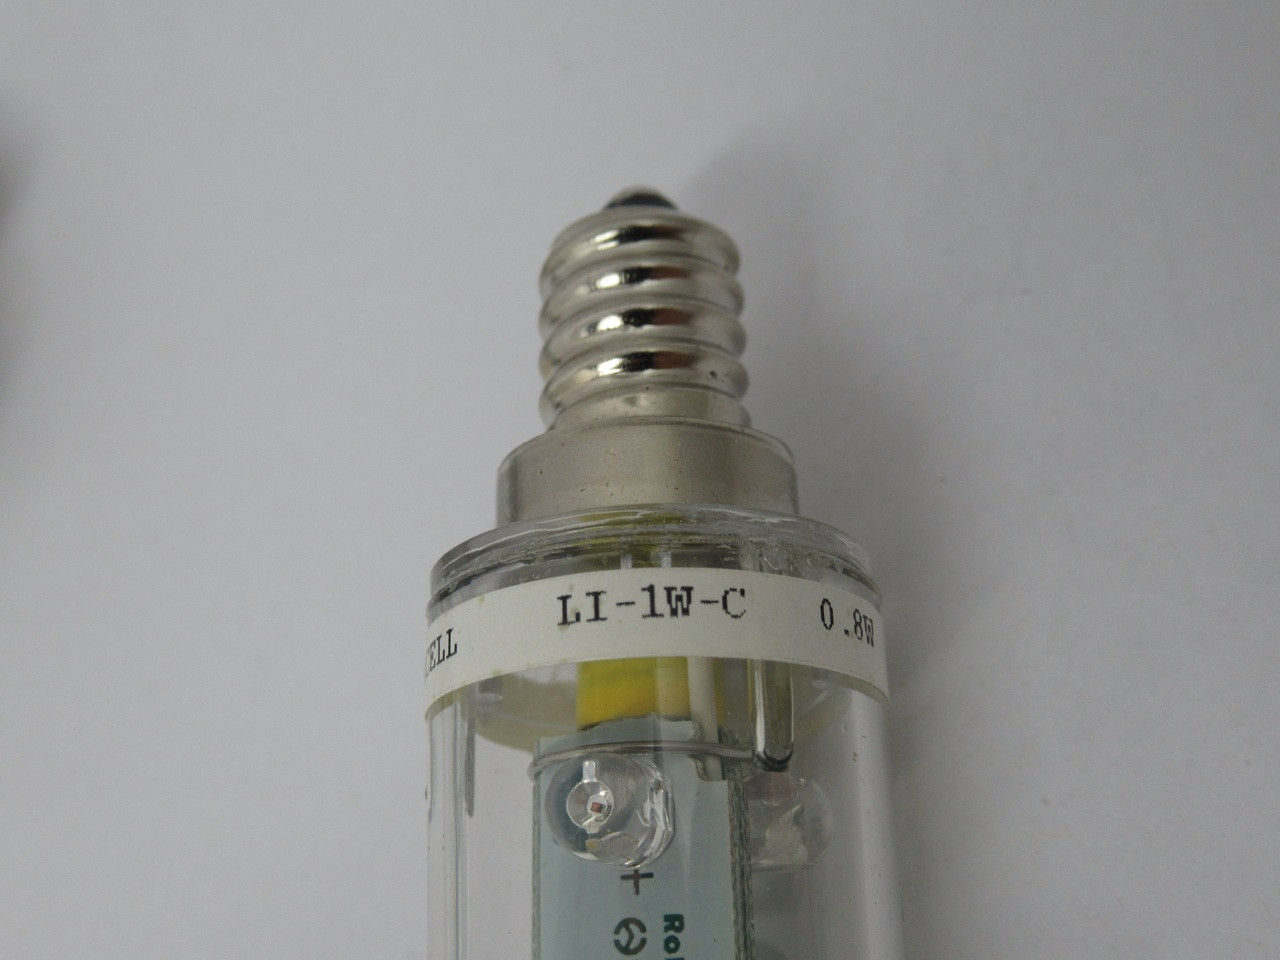 Lumacell L1/1W-C LED Lamp for Exit Sign 0.8W 120VAC 60Hz 2-Pk *Damaged Box* NEW